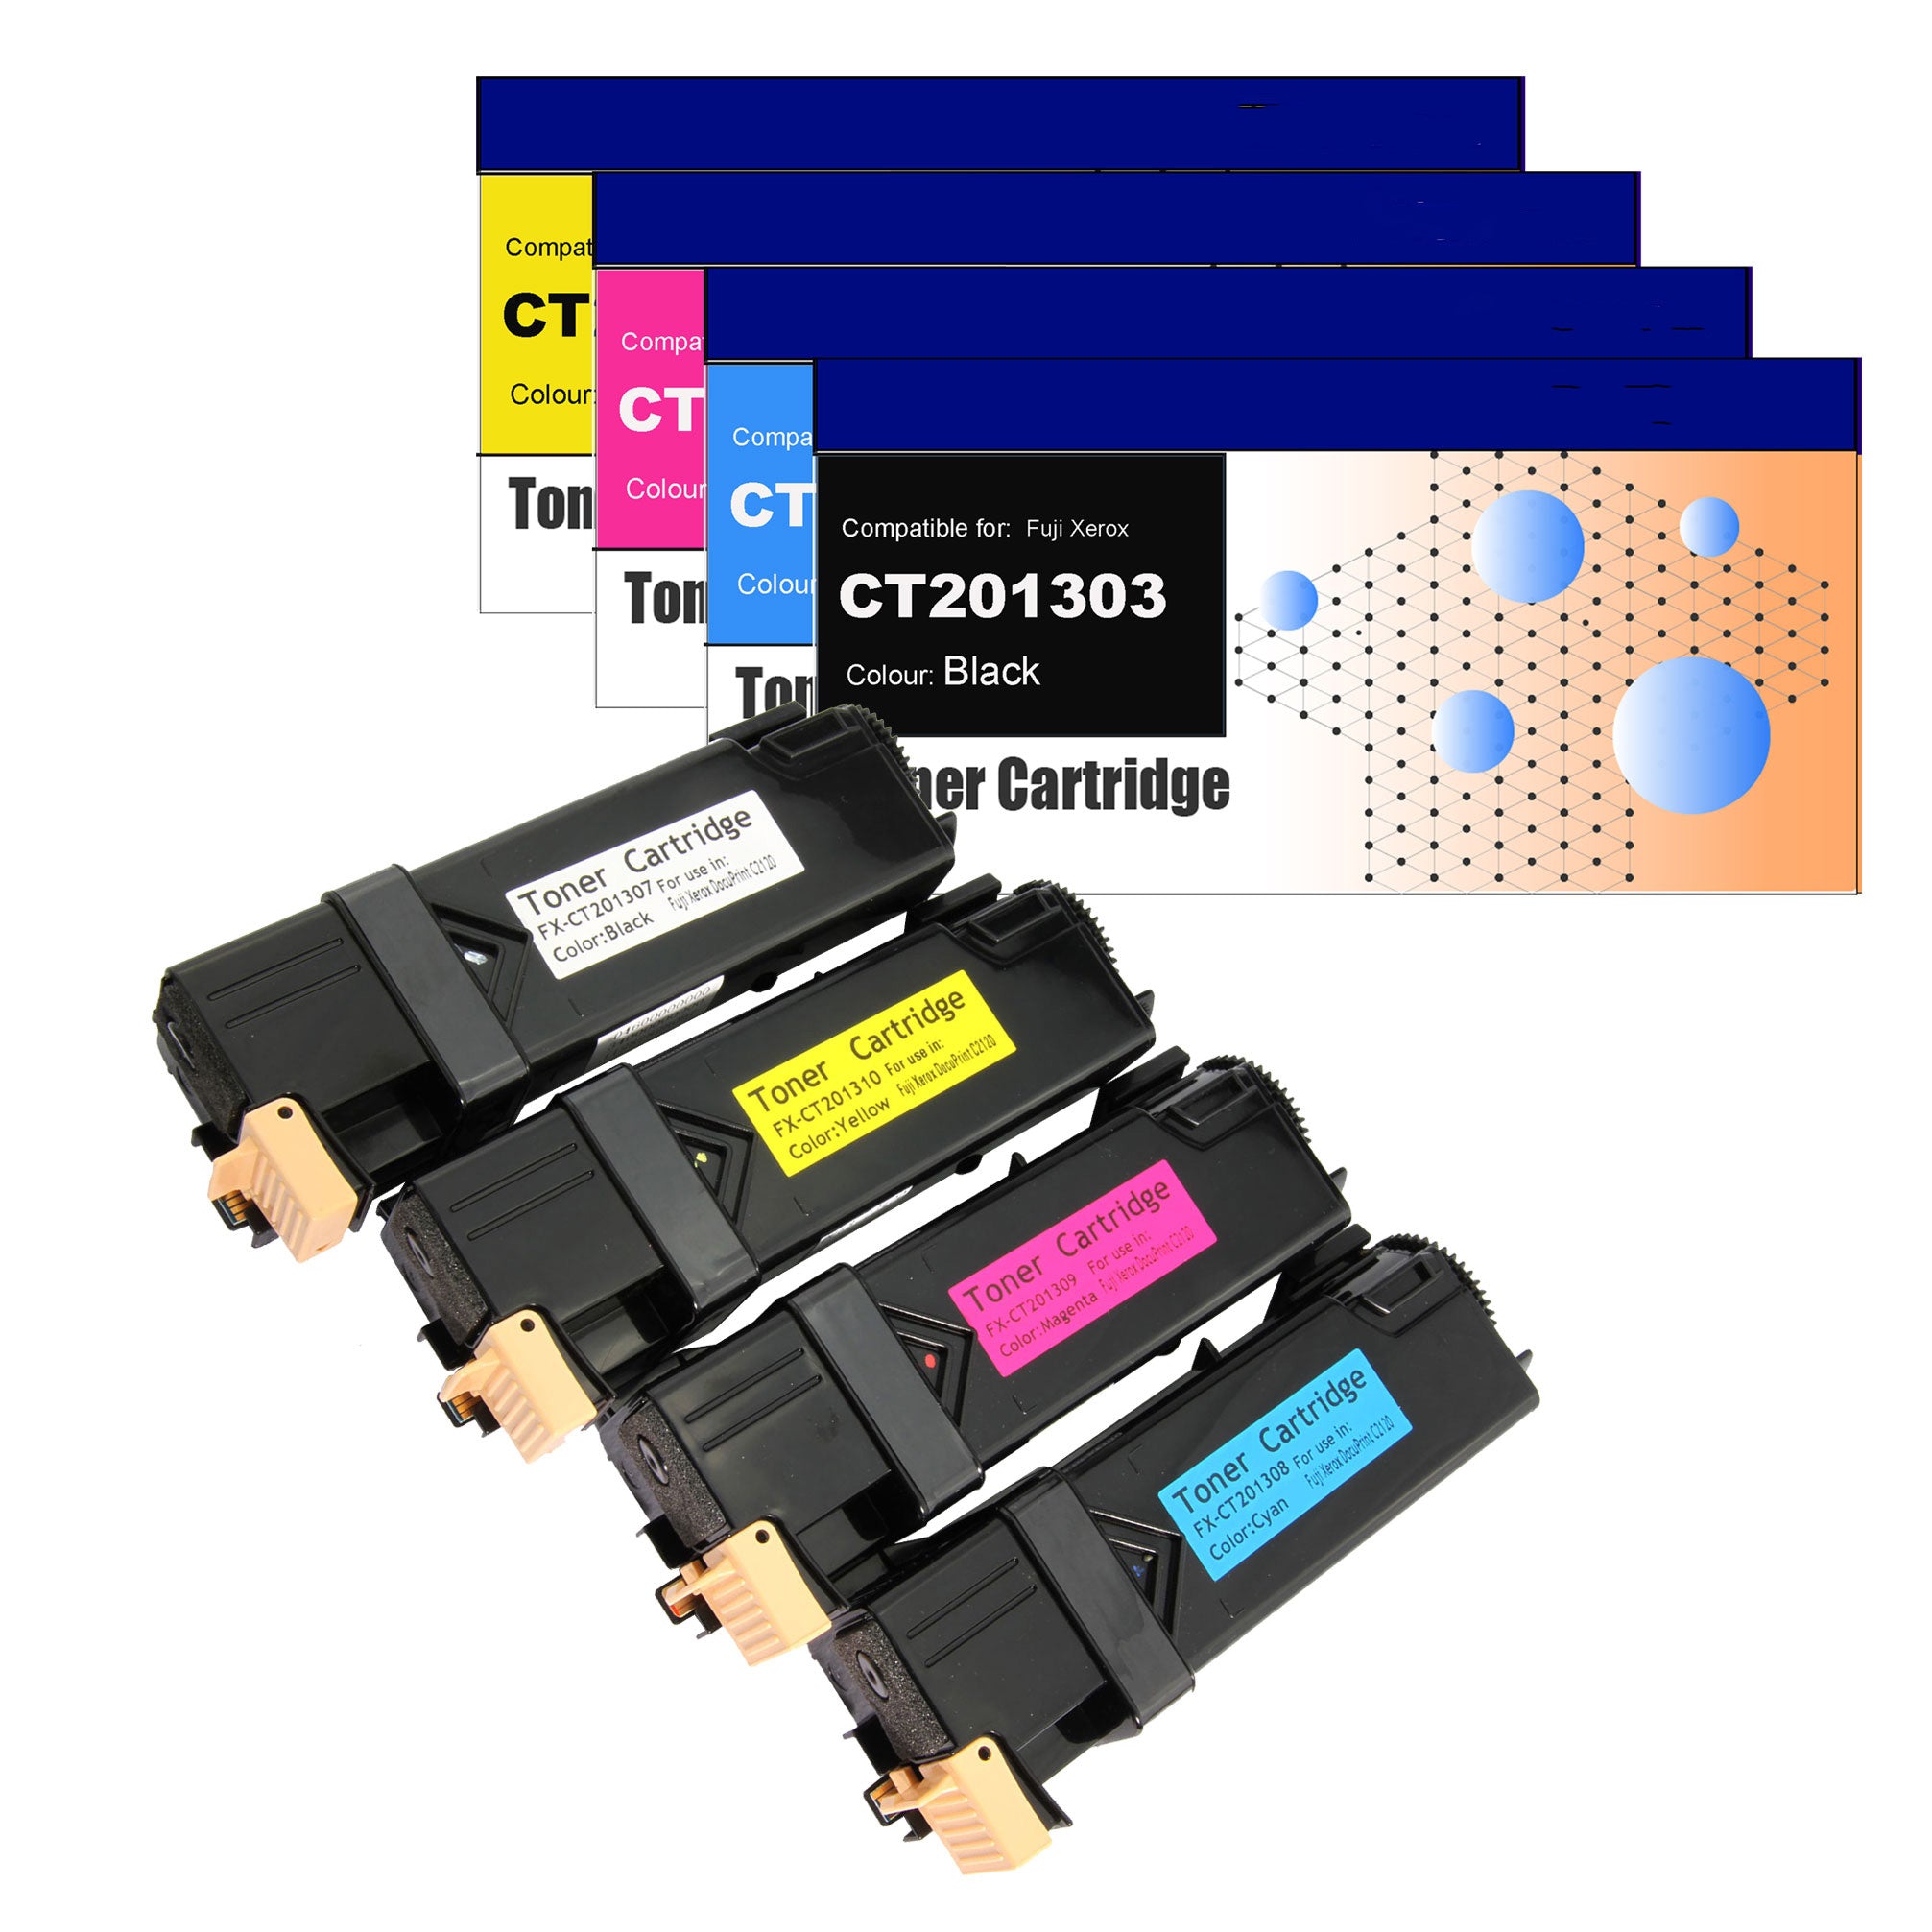 Compatible Toner Cartridges for Fuji Xerox CT201303 / CT201304 / CT201305 / CT201306 (C2120)